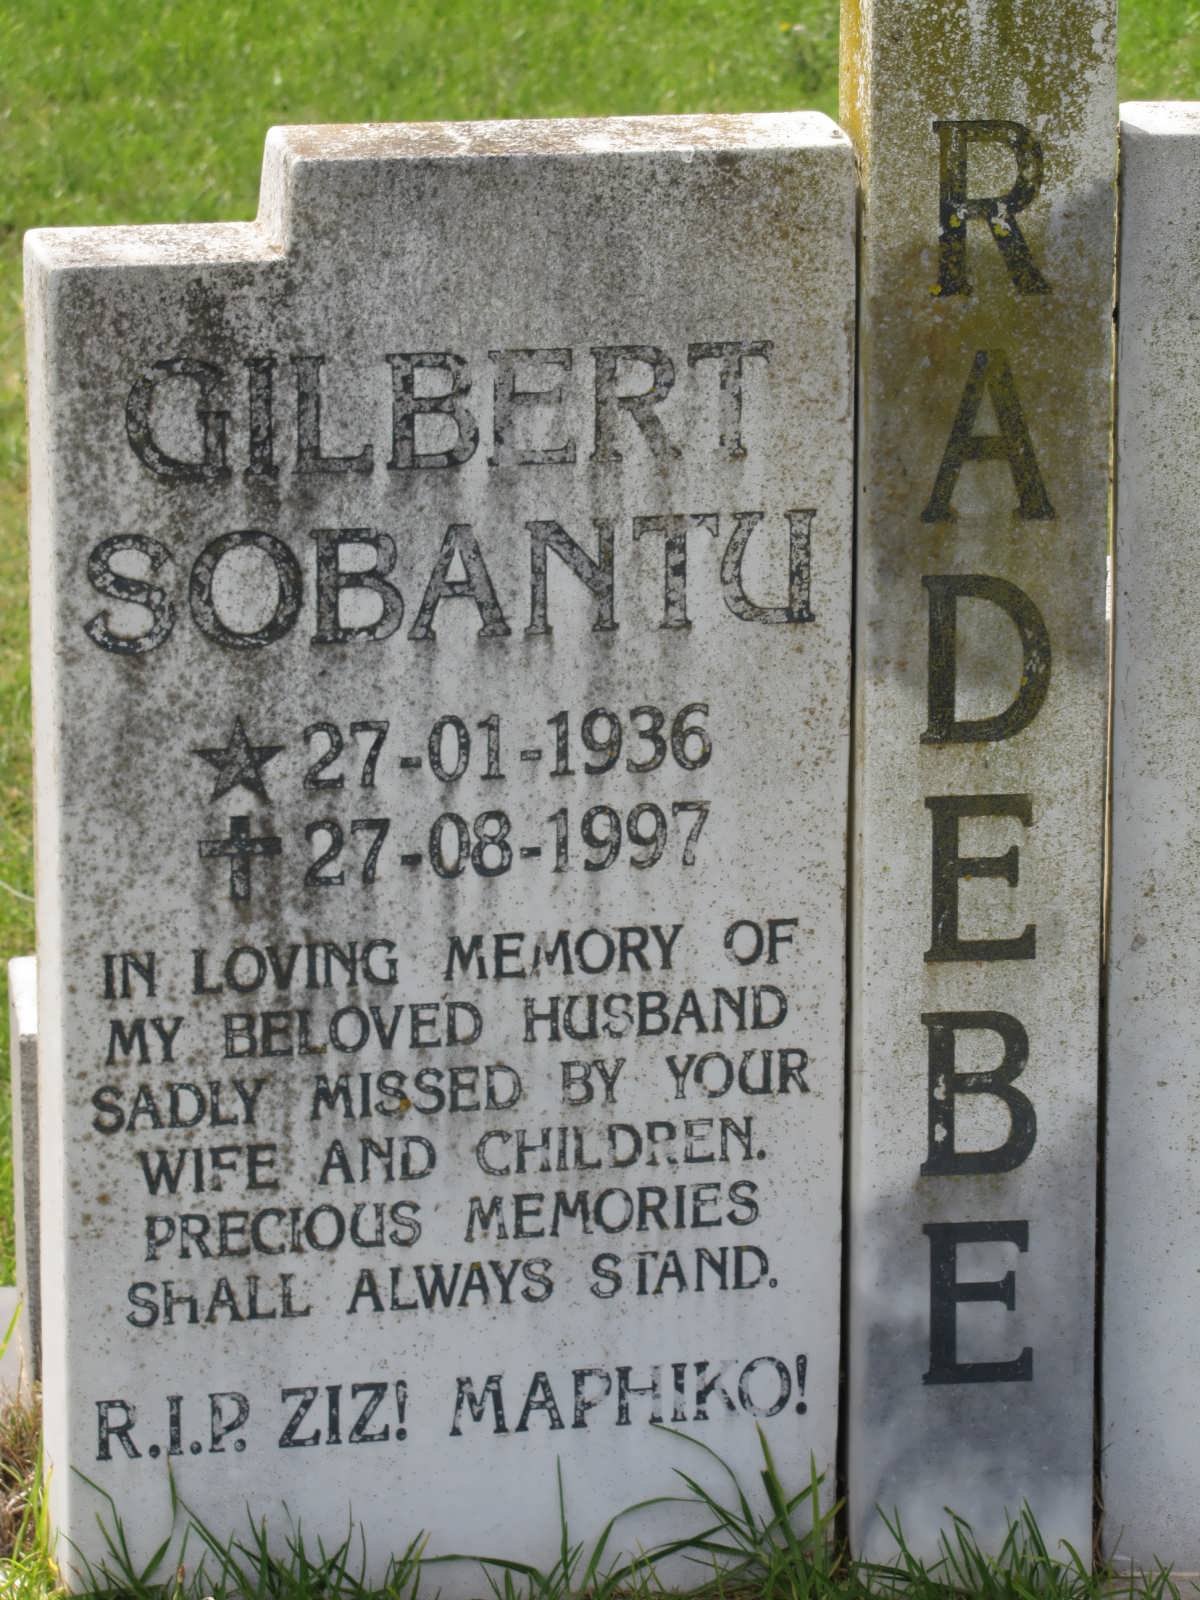 RADEBE Gilbert Sobantu 1936-1997